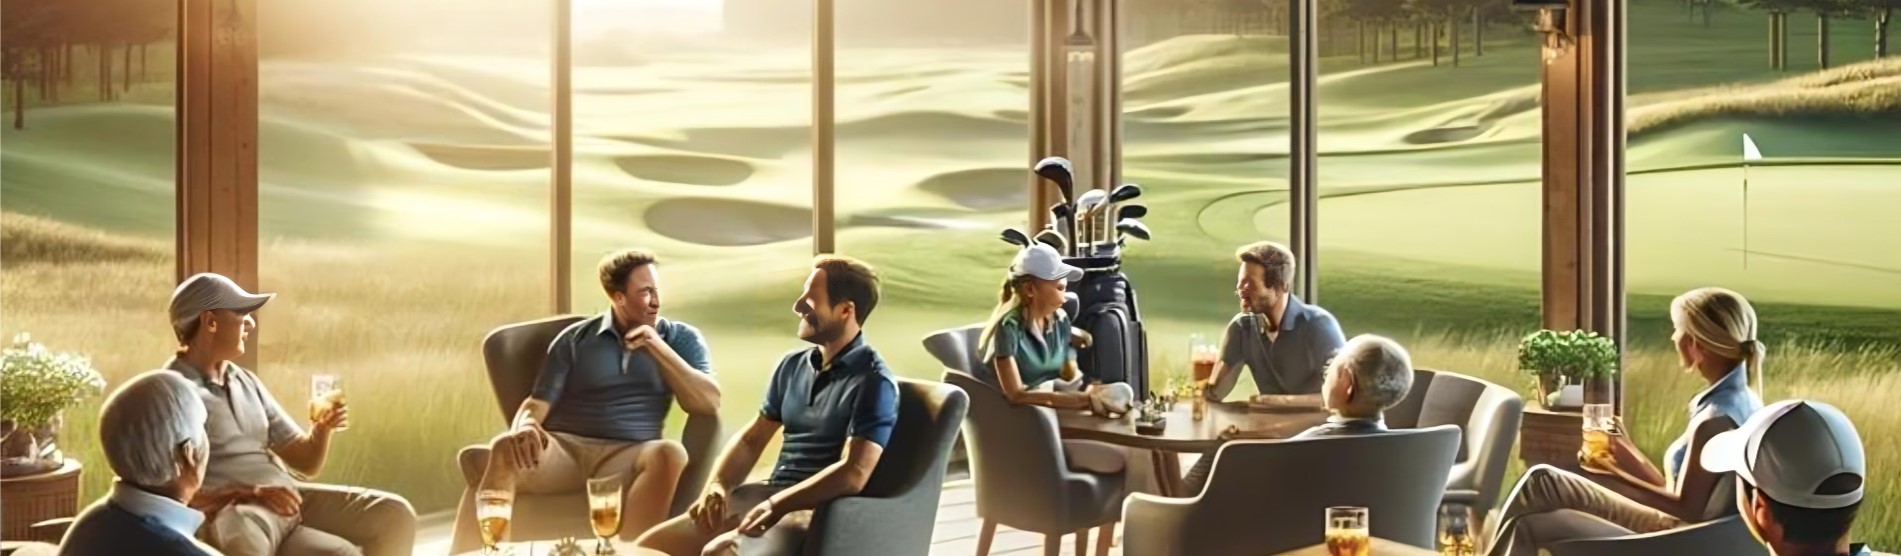 Flexible members sitting in the golf, spa & leisure club